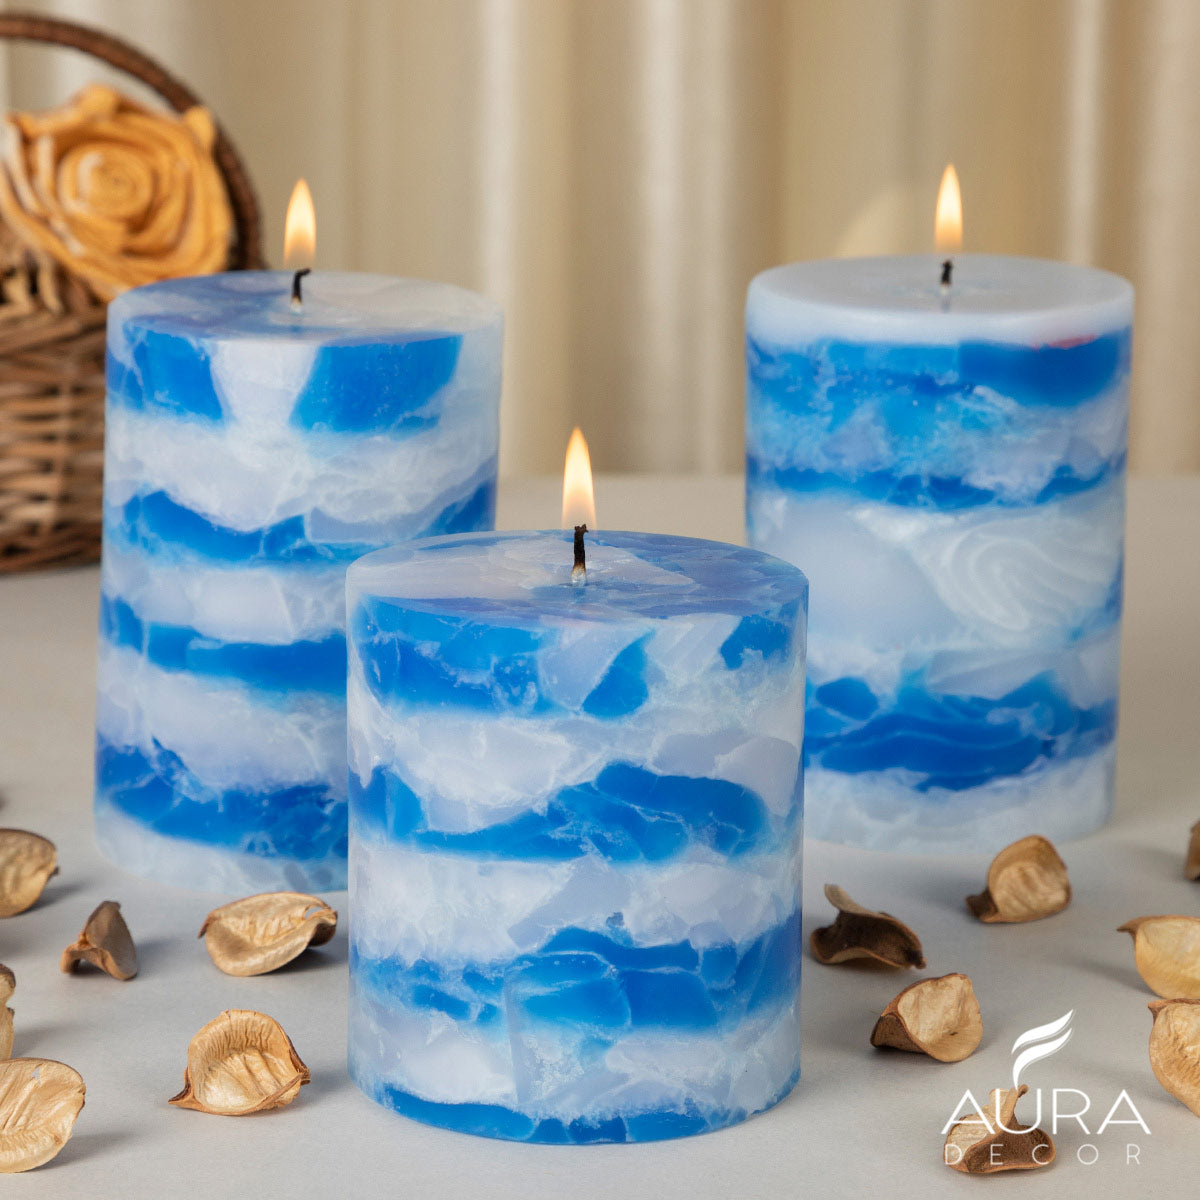 Sea Breeze Fragrance Chunk Pillar Candle ( 3*3, 3*4, 3*6 inch )